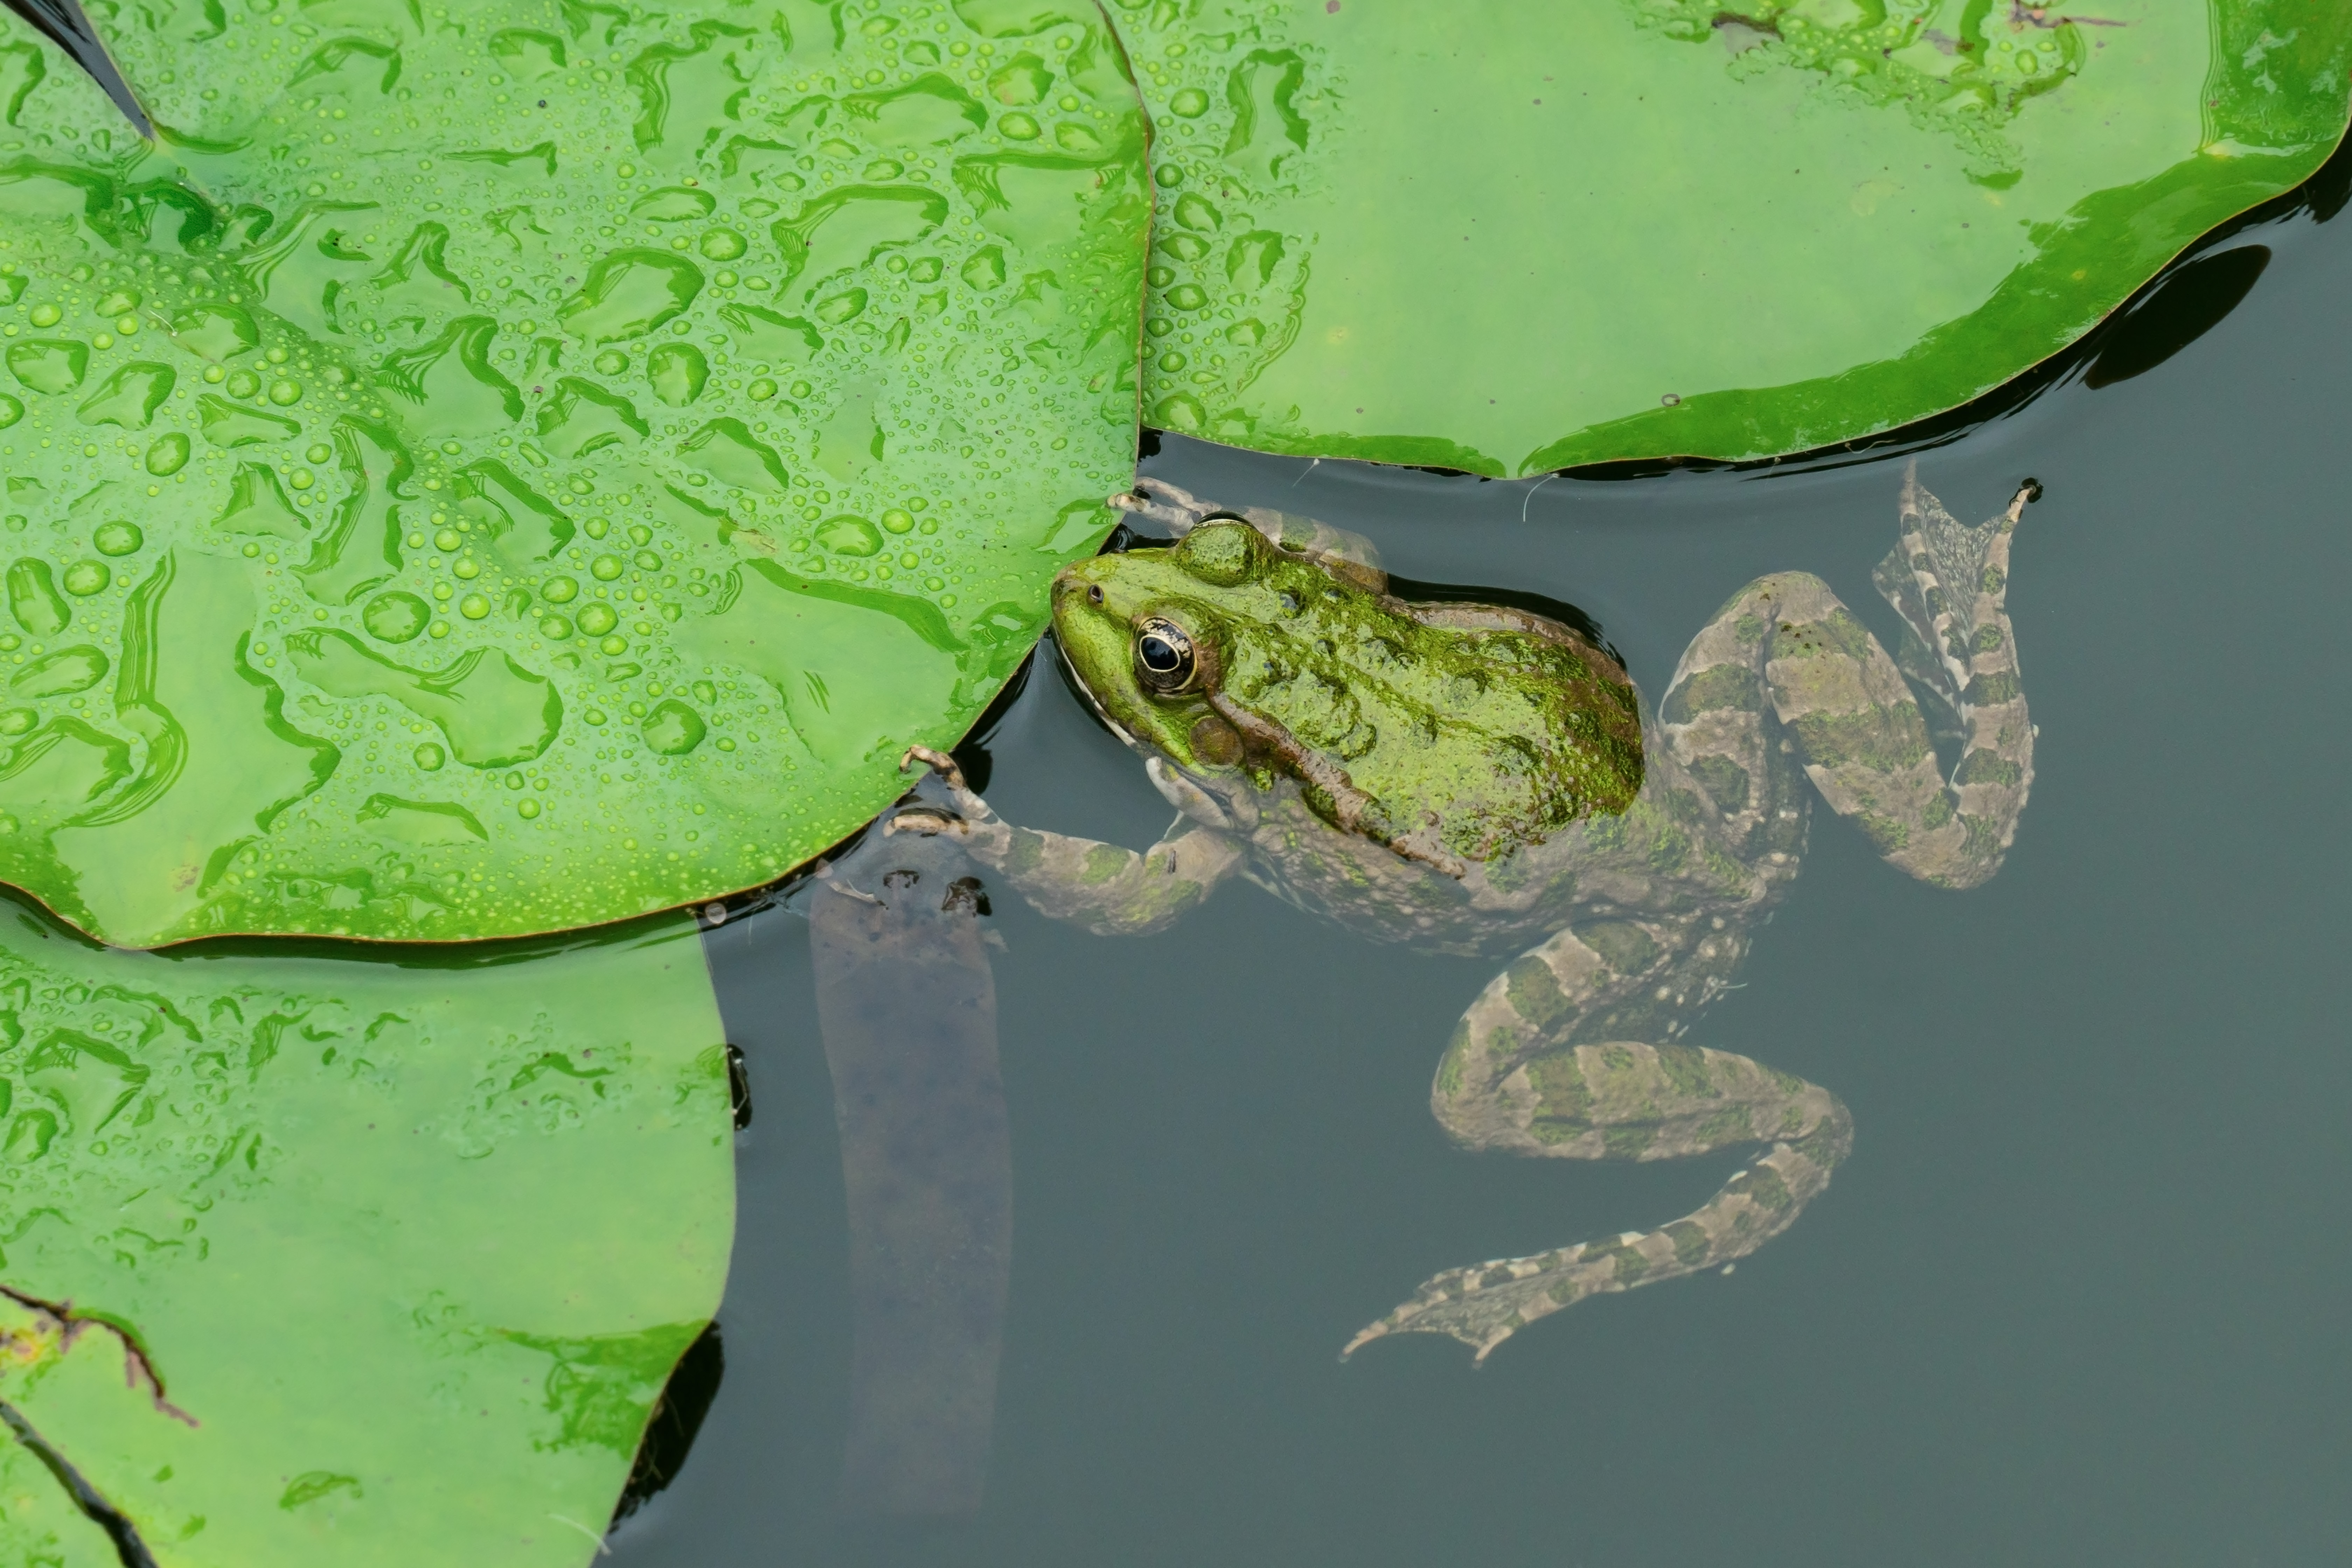 Are Frogs in the Garden Dangerous?